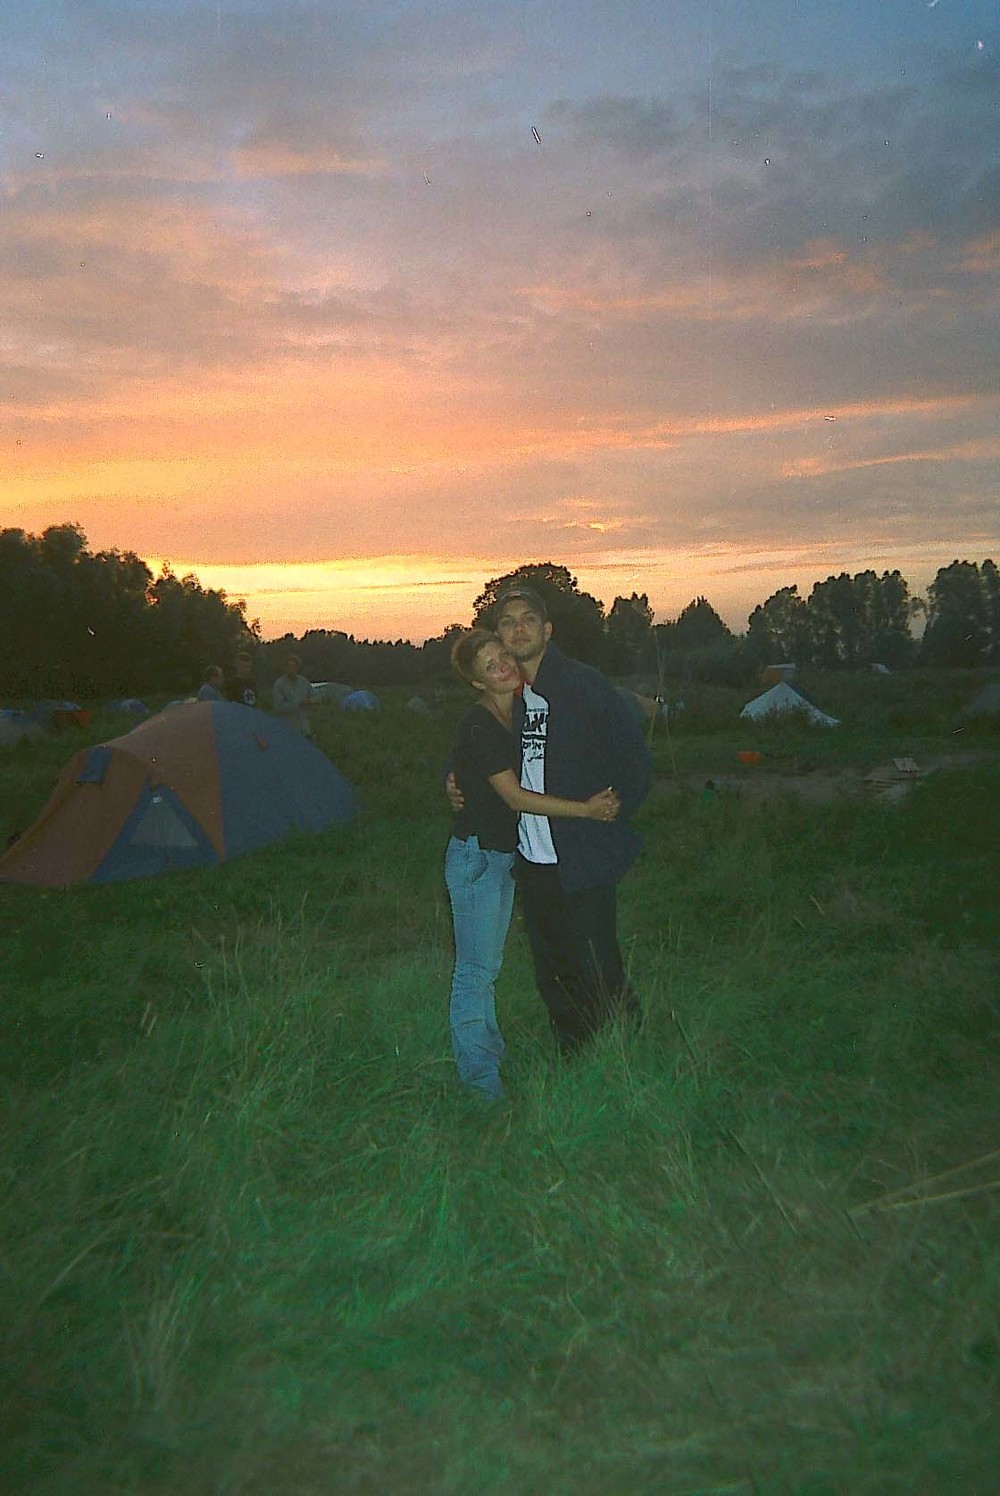 лагерь Экотопия, Нидерланды, год 2004